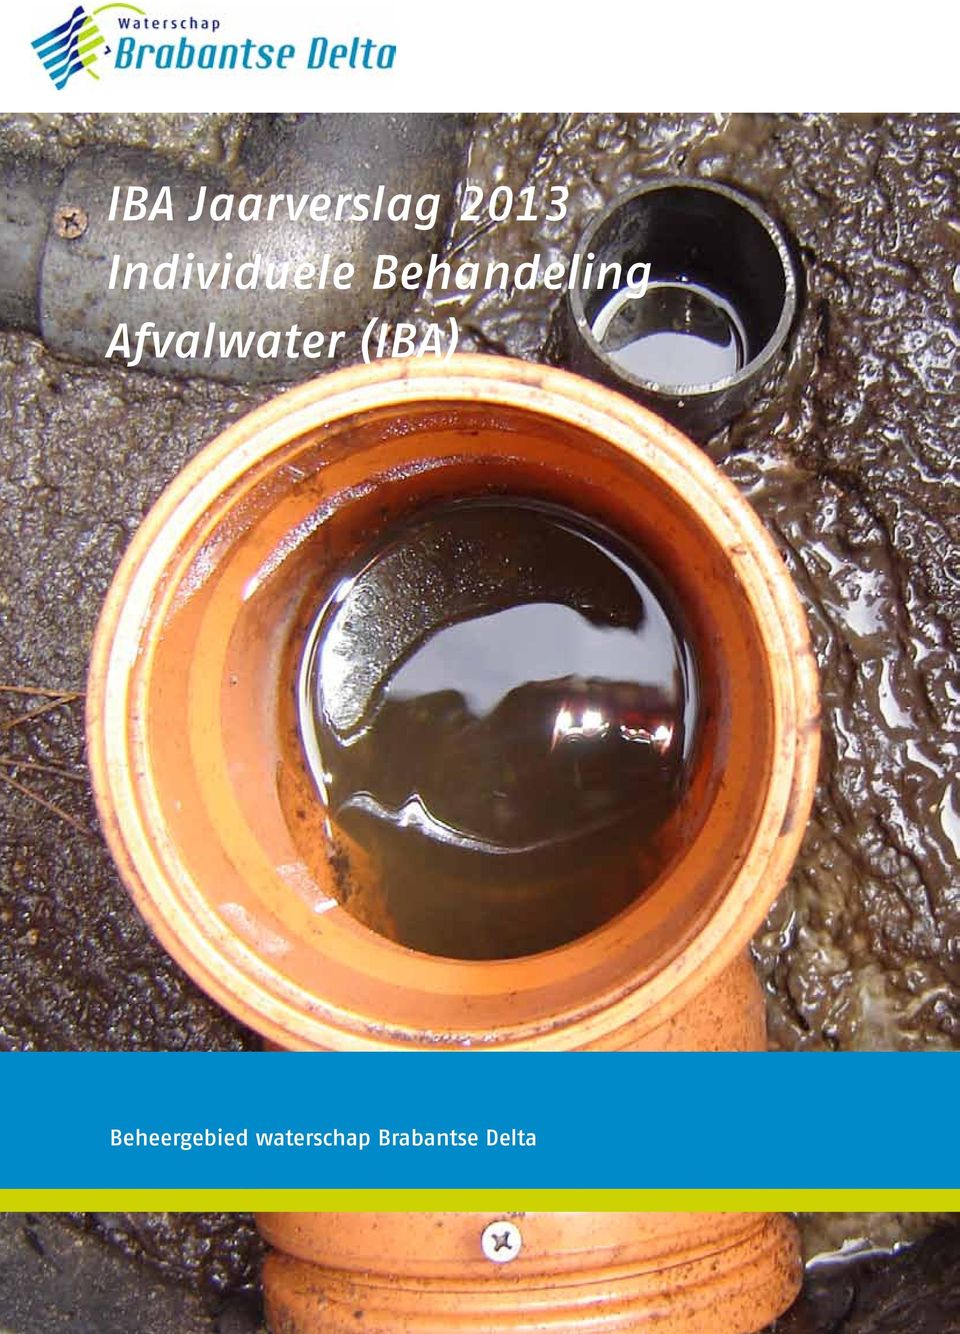 Afvalwater (IBA)